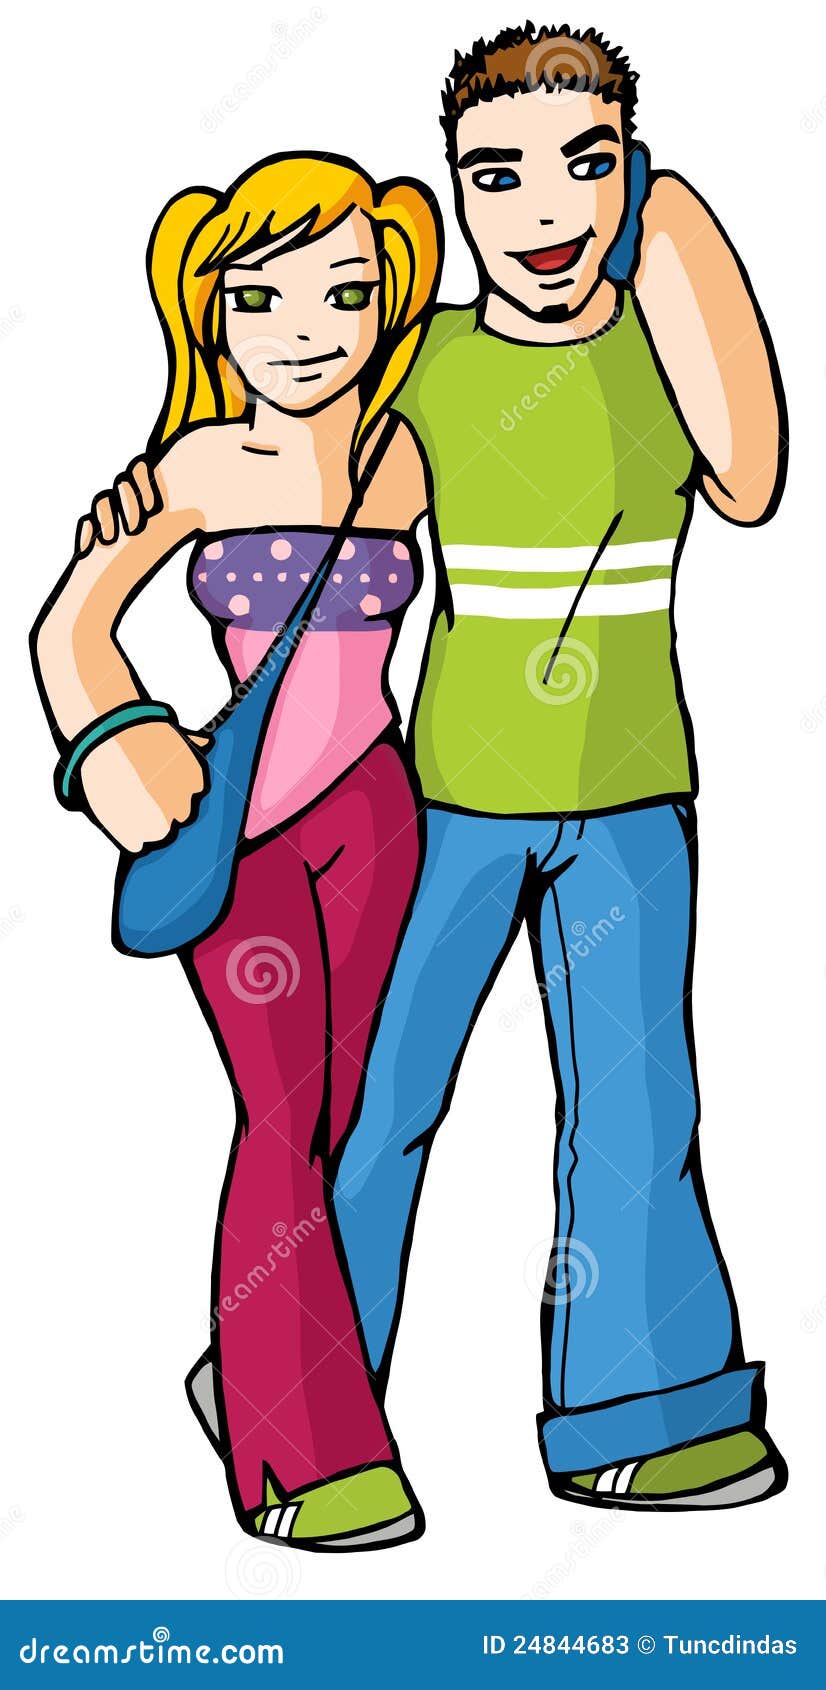 Couple 01 stock illustration. Illustration of couple - 24844683